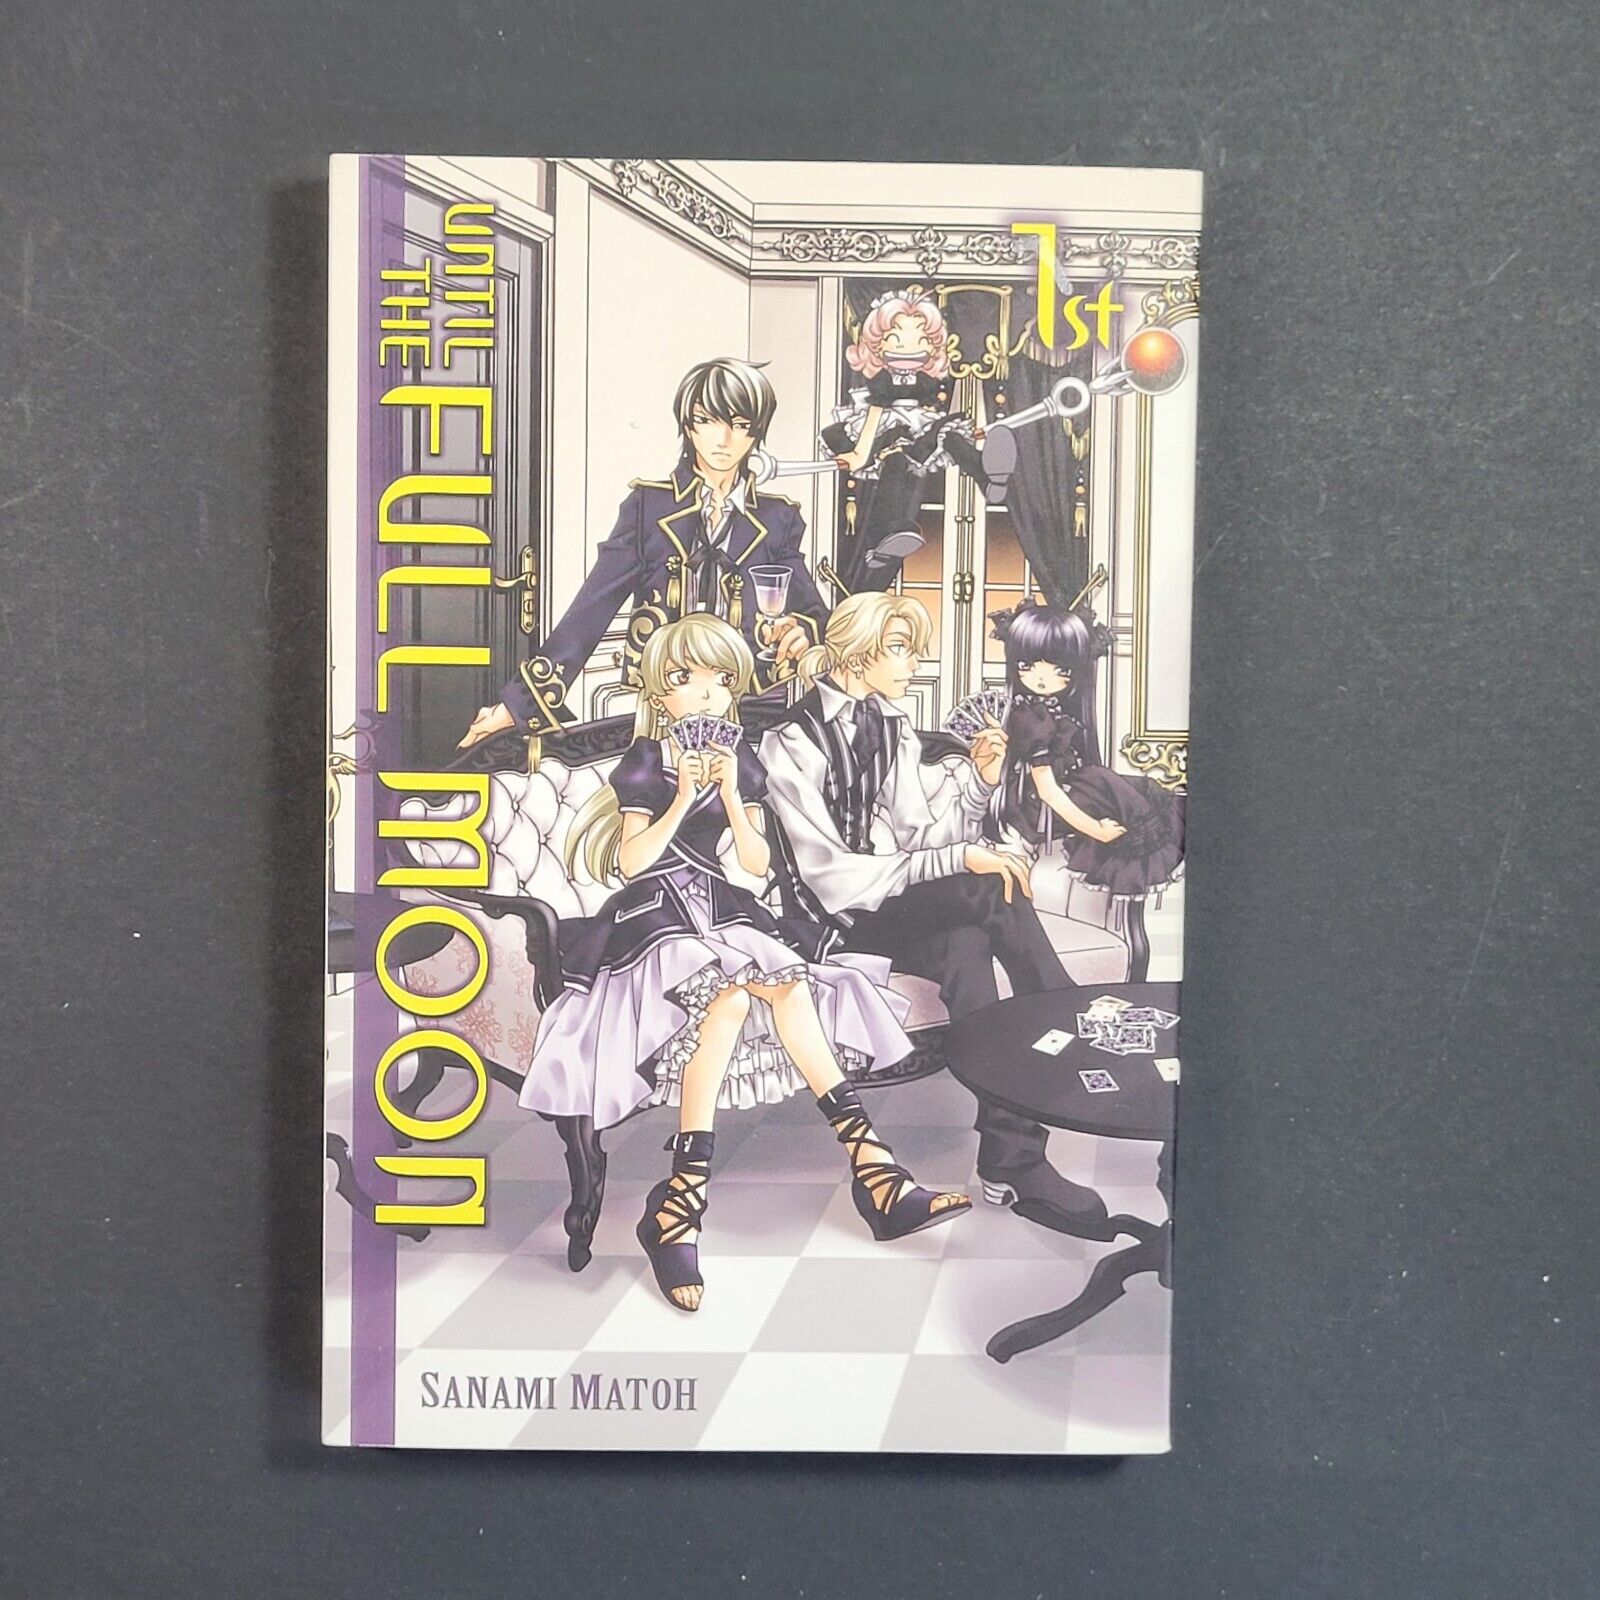 Manga - Until the Full Moon - Vol 1 - English - Sanami Matoh - VF/NM Condition